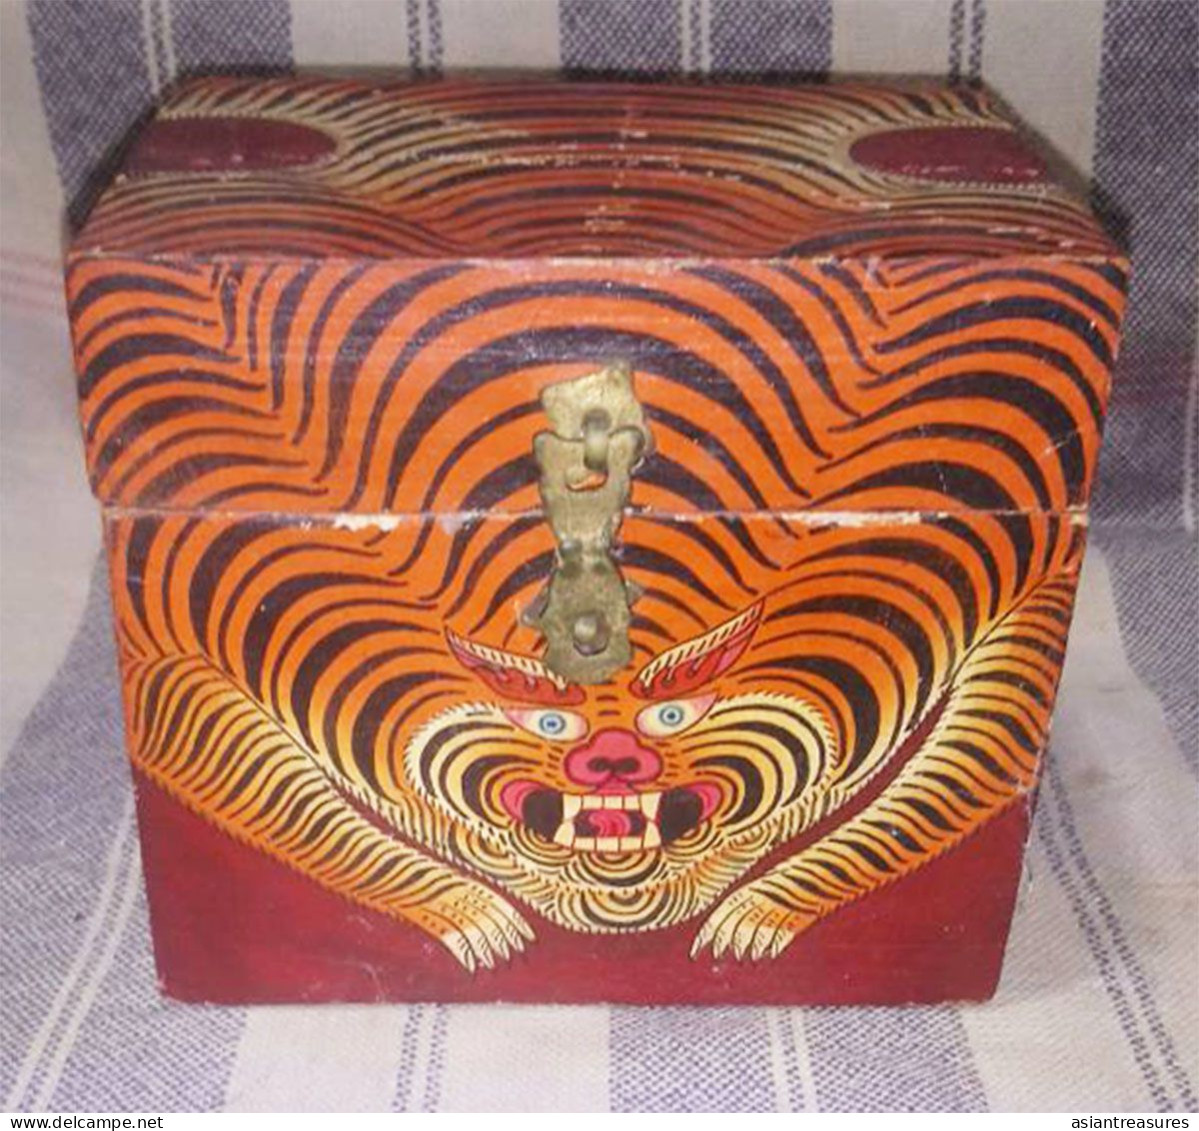 Antique Tibet Treasure Box With Tiger Design Intricate Work - Art Asiatique